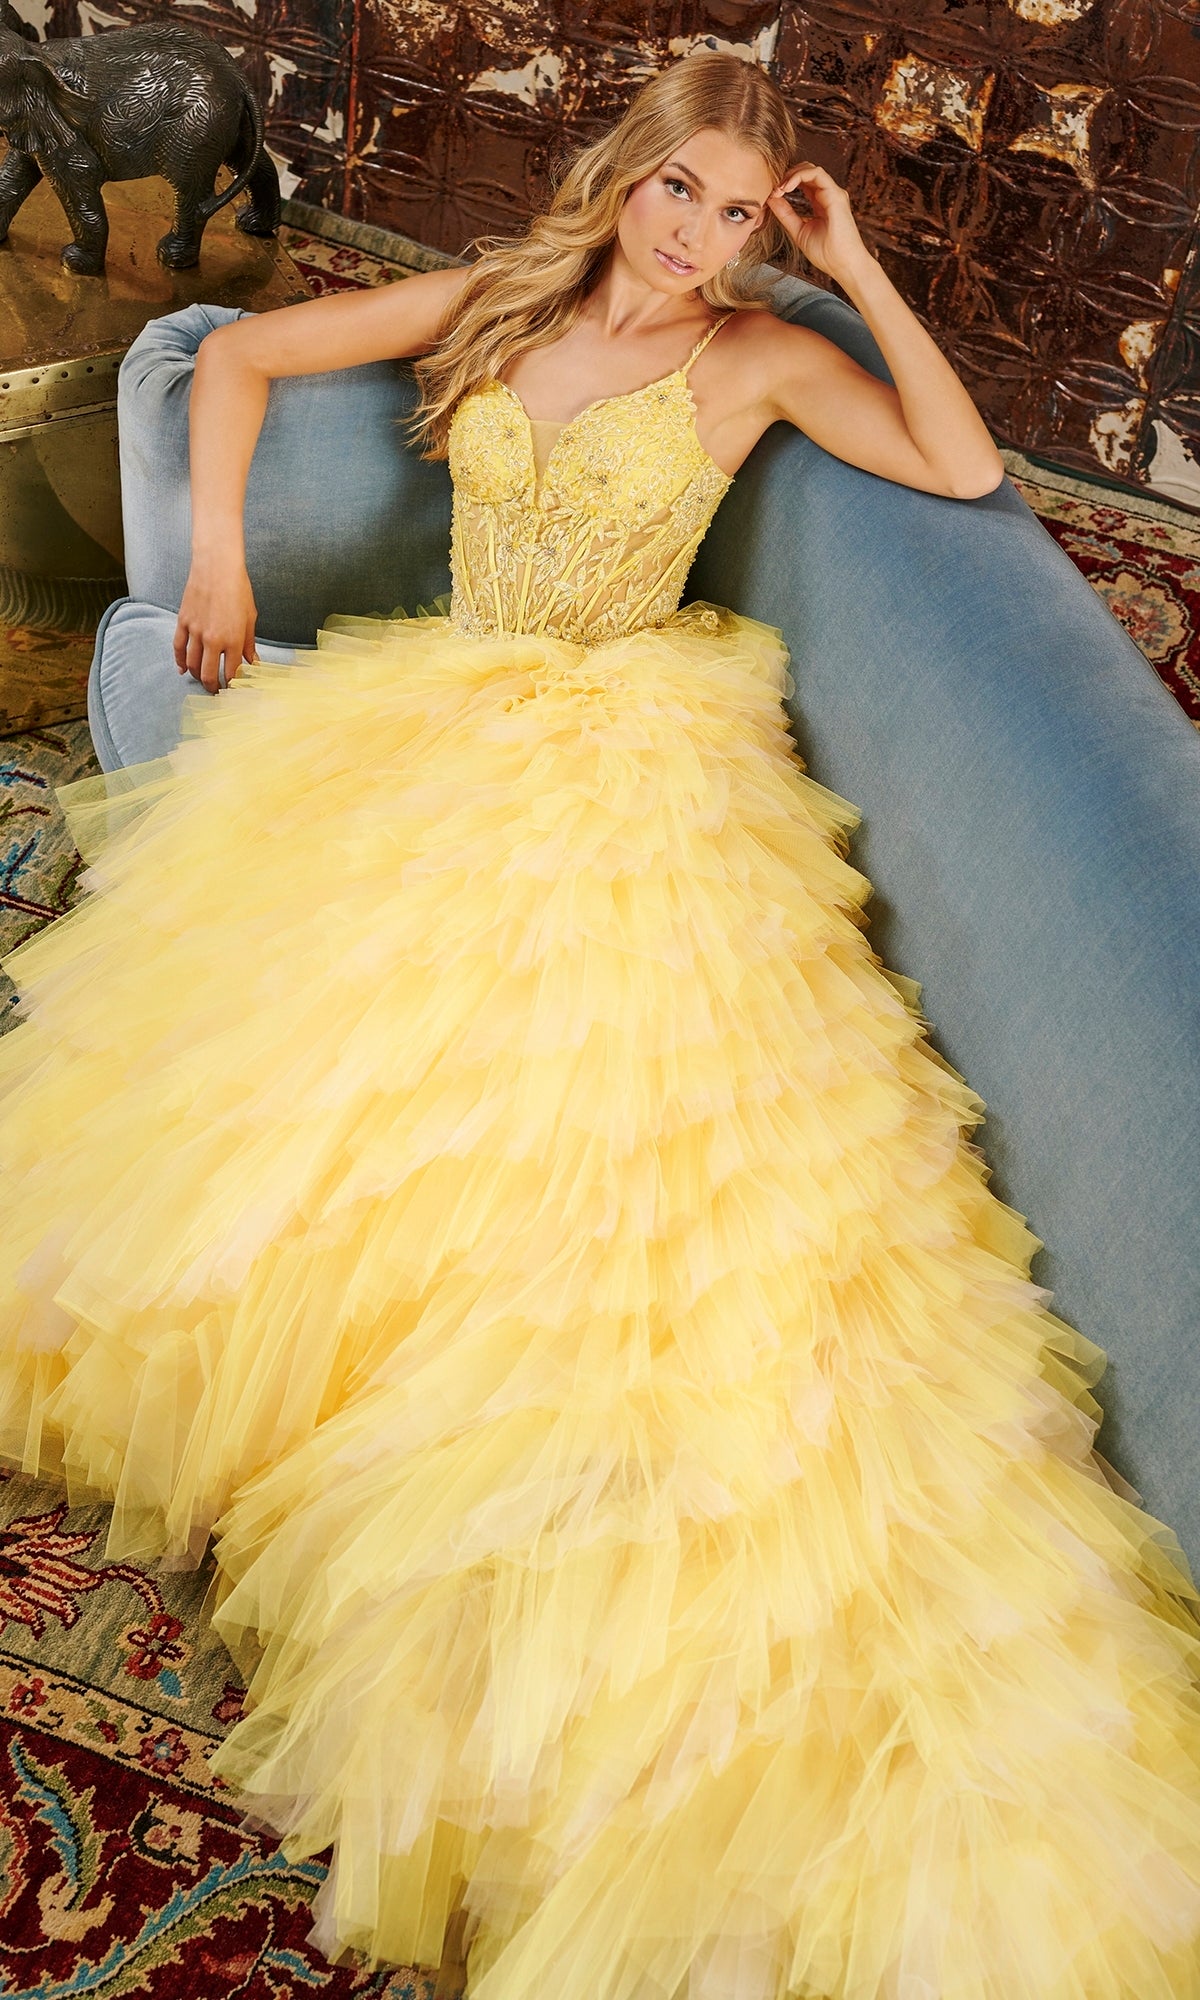 Long Prom Dress 16115 by Tiffany